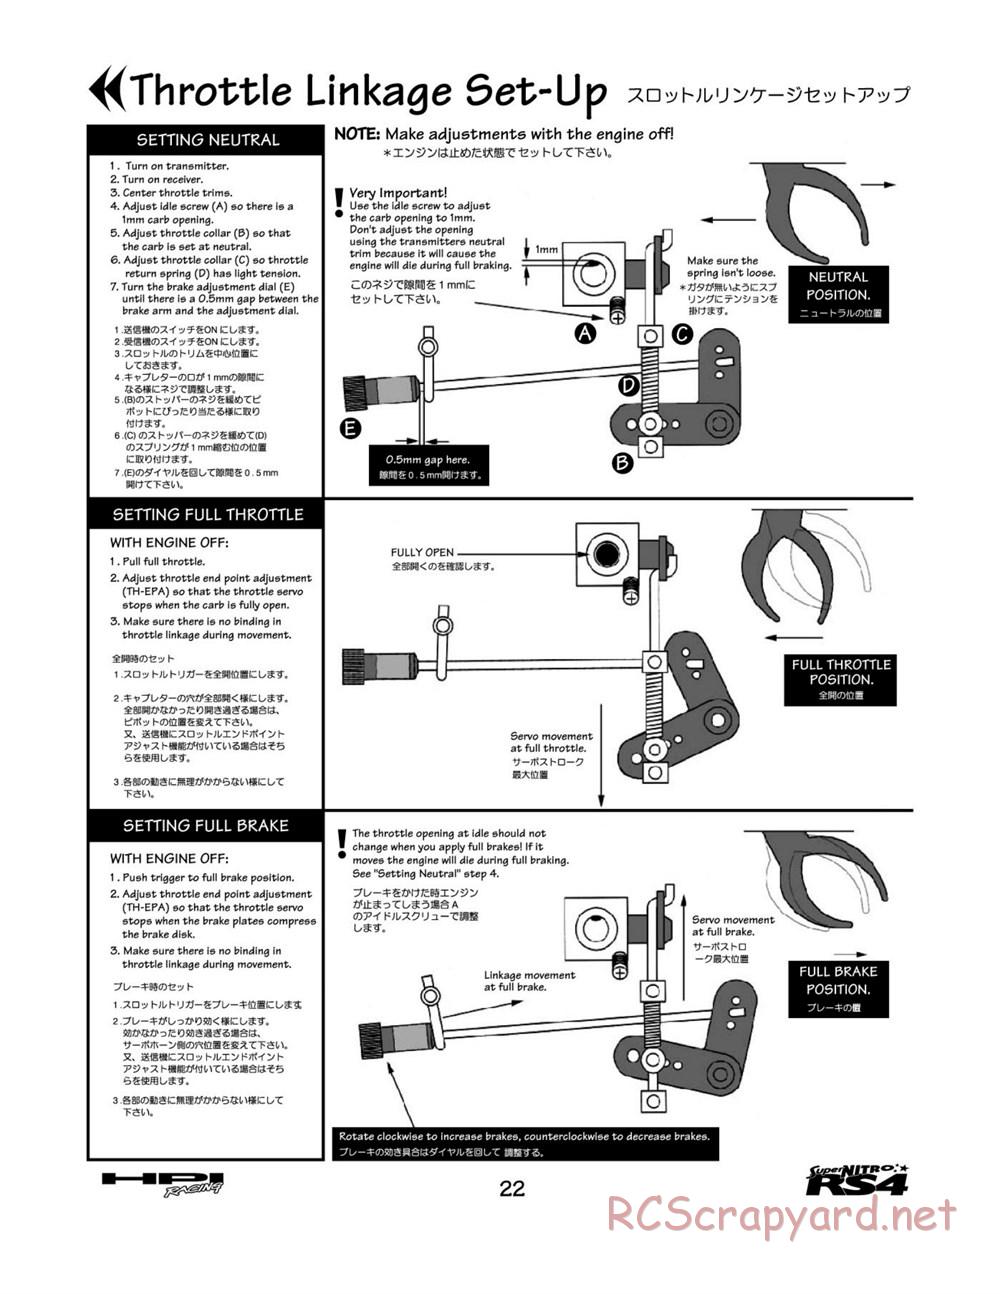 HPI - Super Nitro RS4 - Manual - Page 22